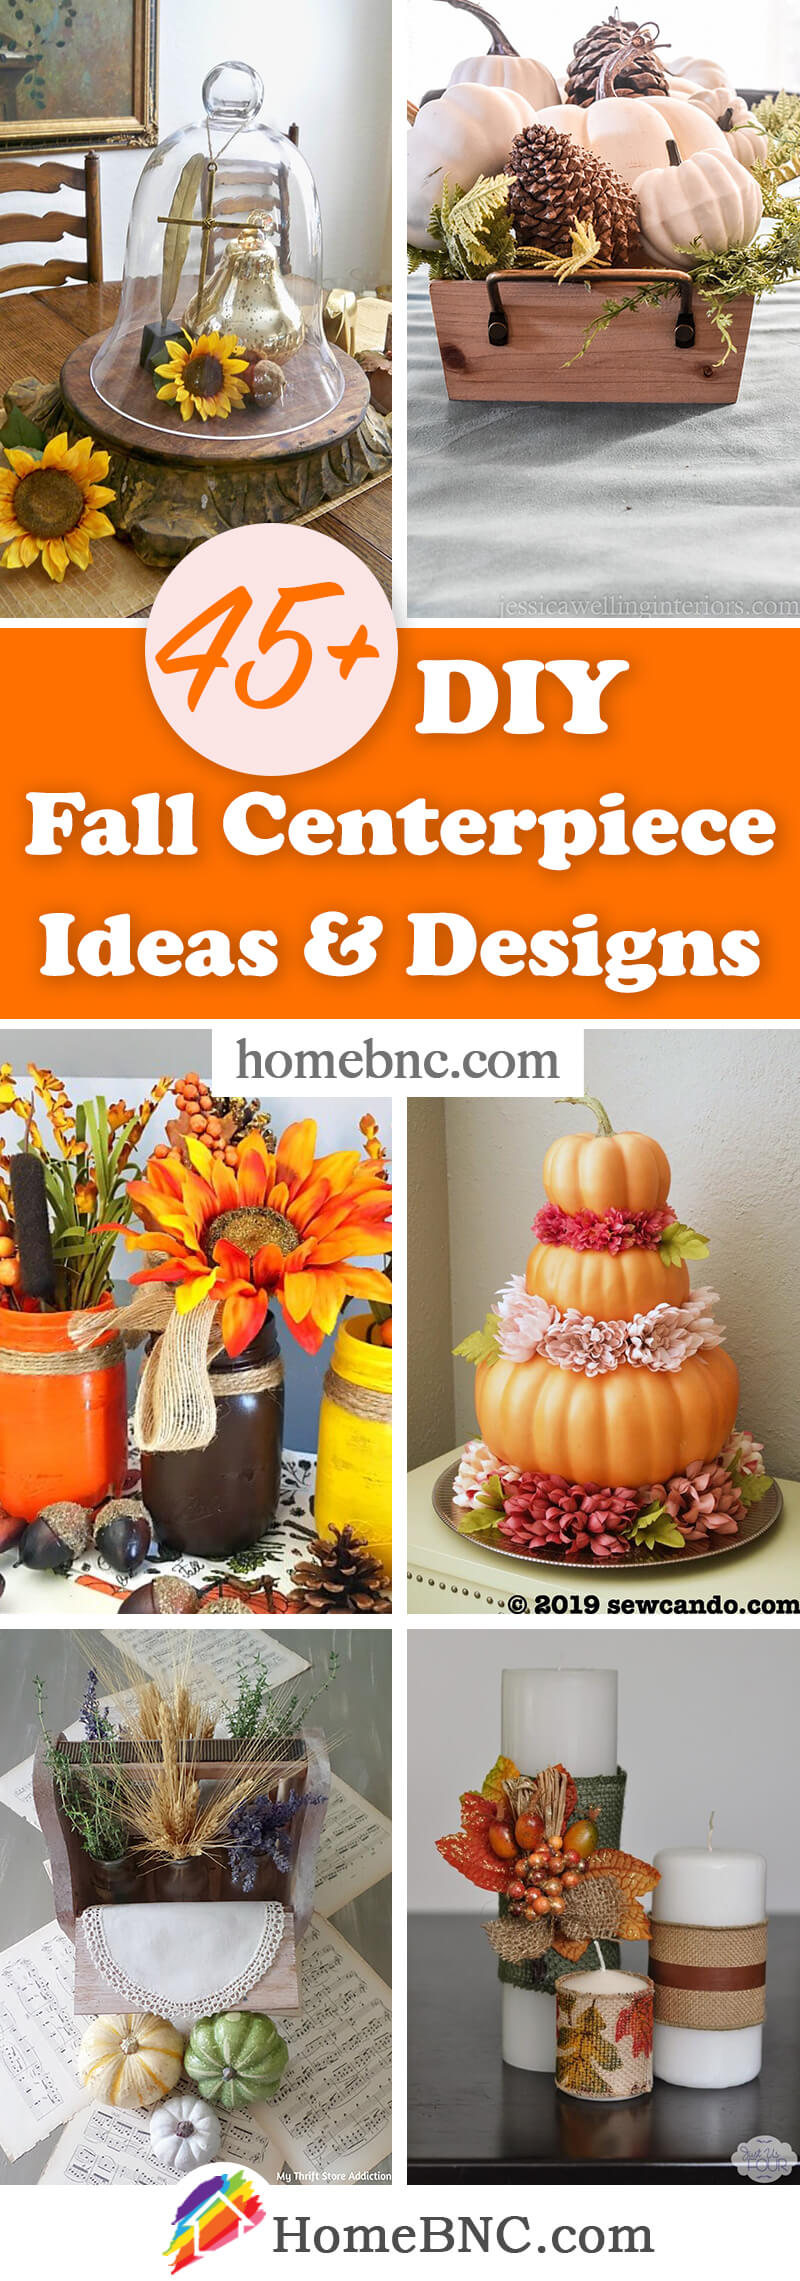 DIY Fall Centerpieces